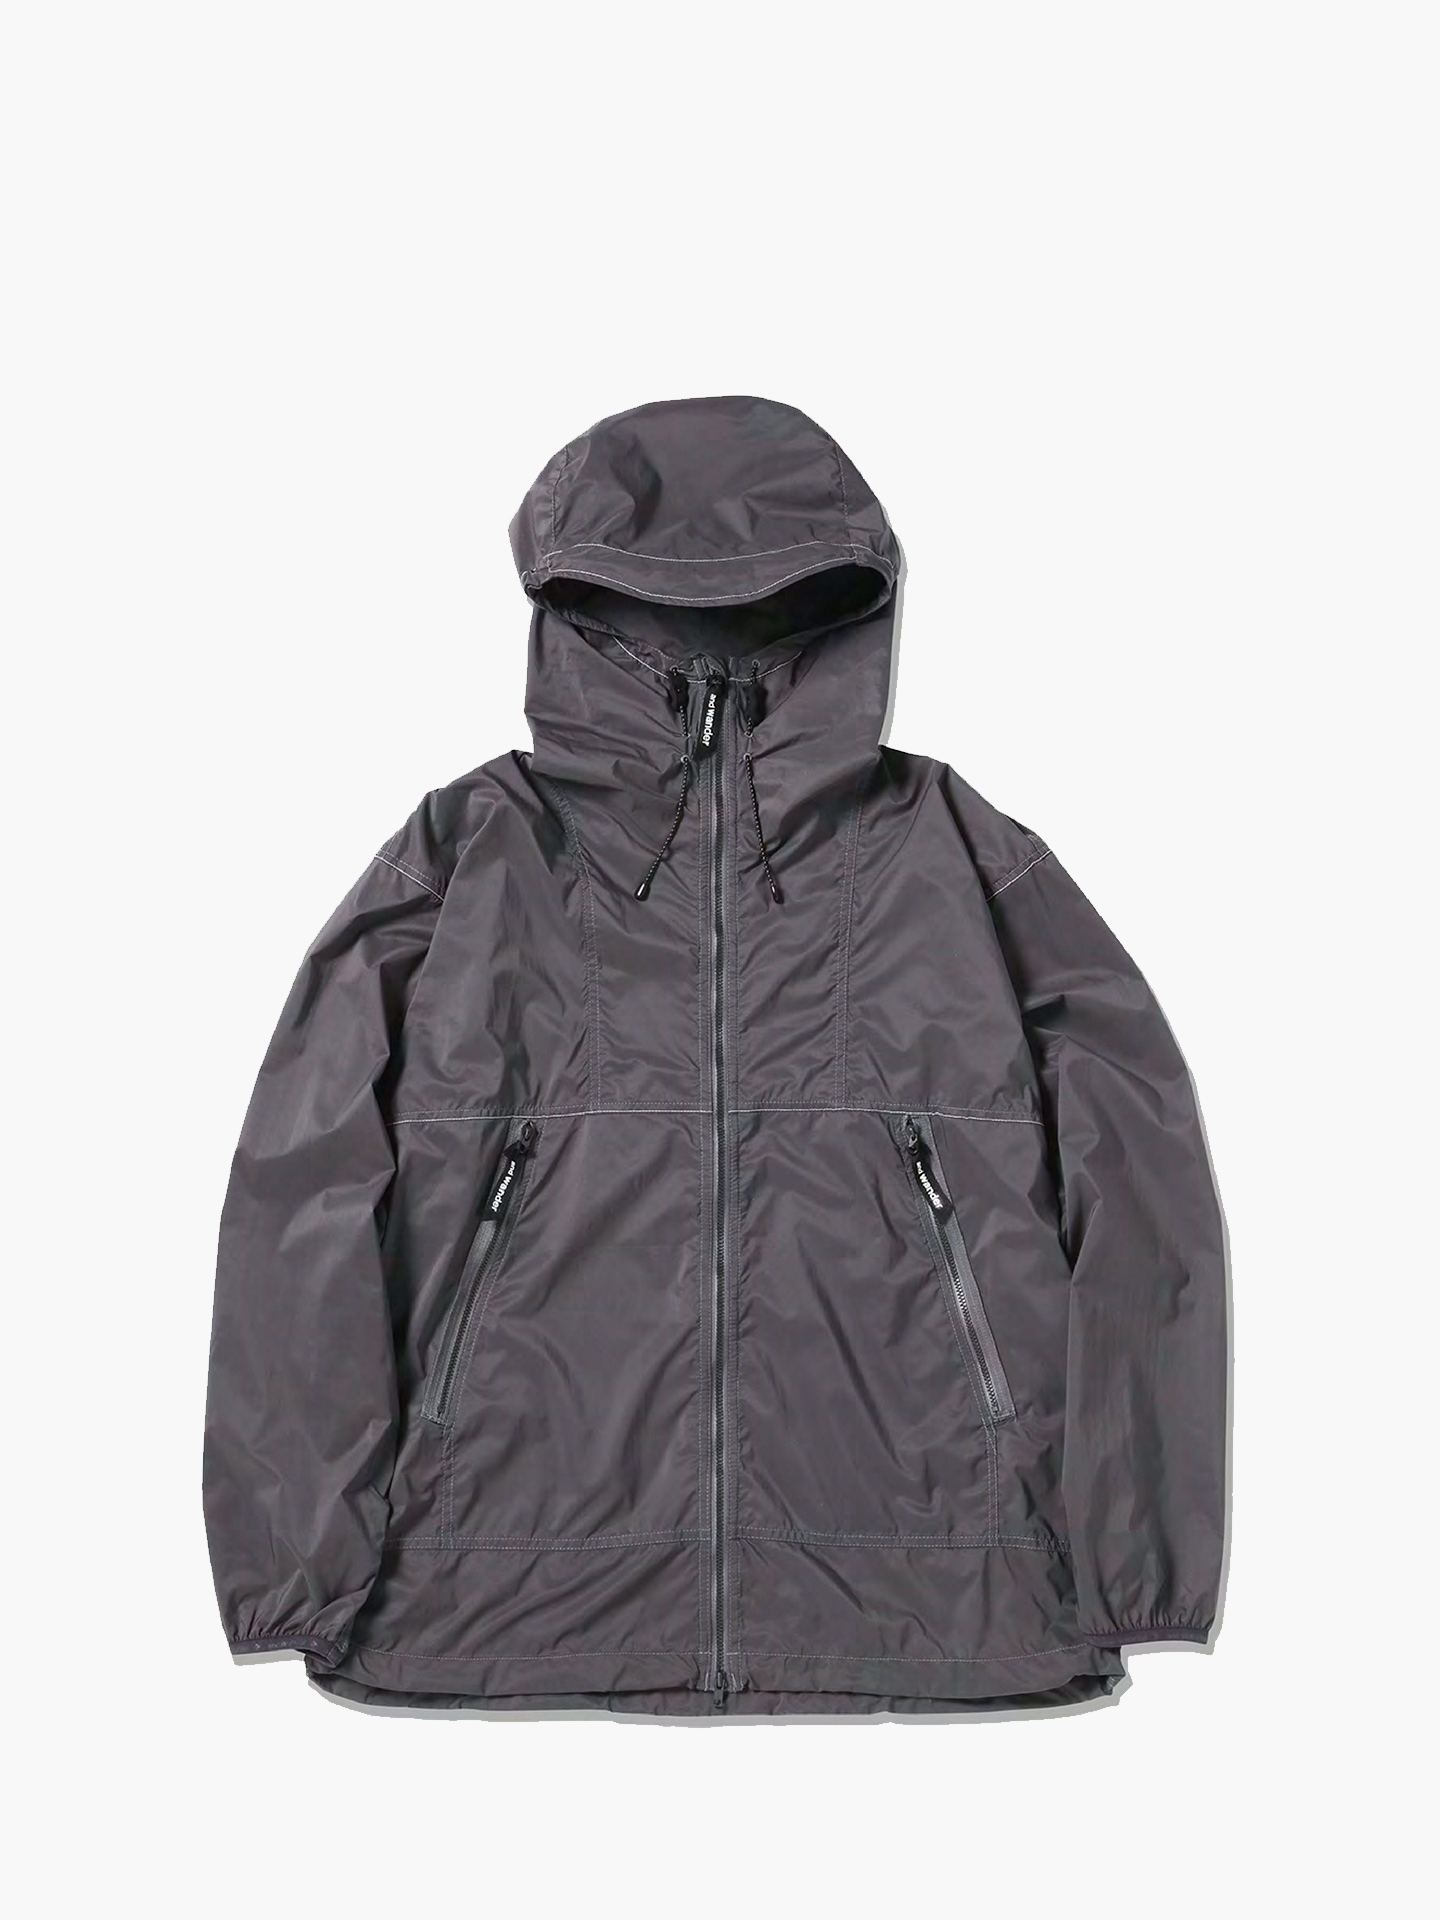 PERTEX wind jacket Куртка-ветровка, 100% нейлон, размер L, серый